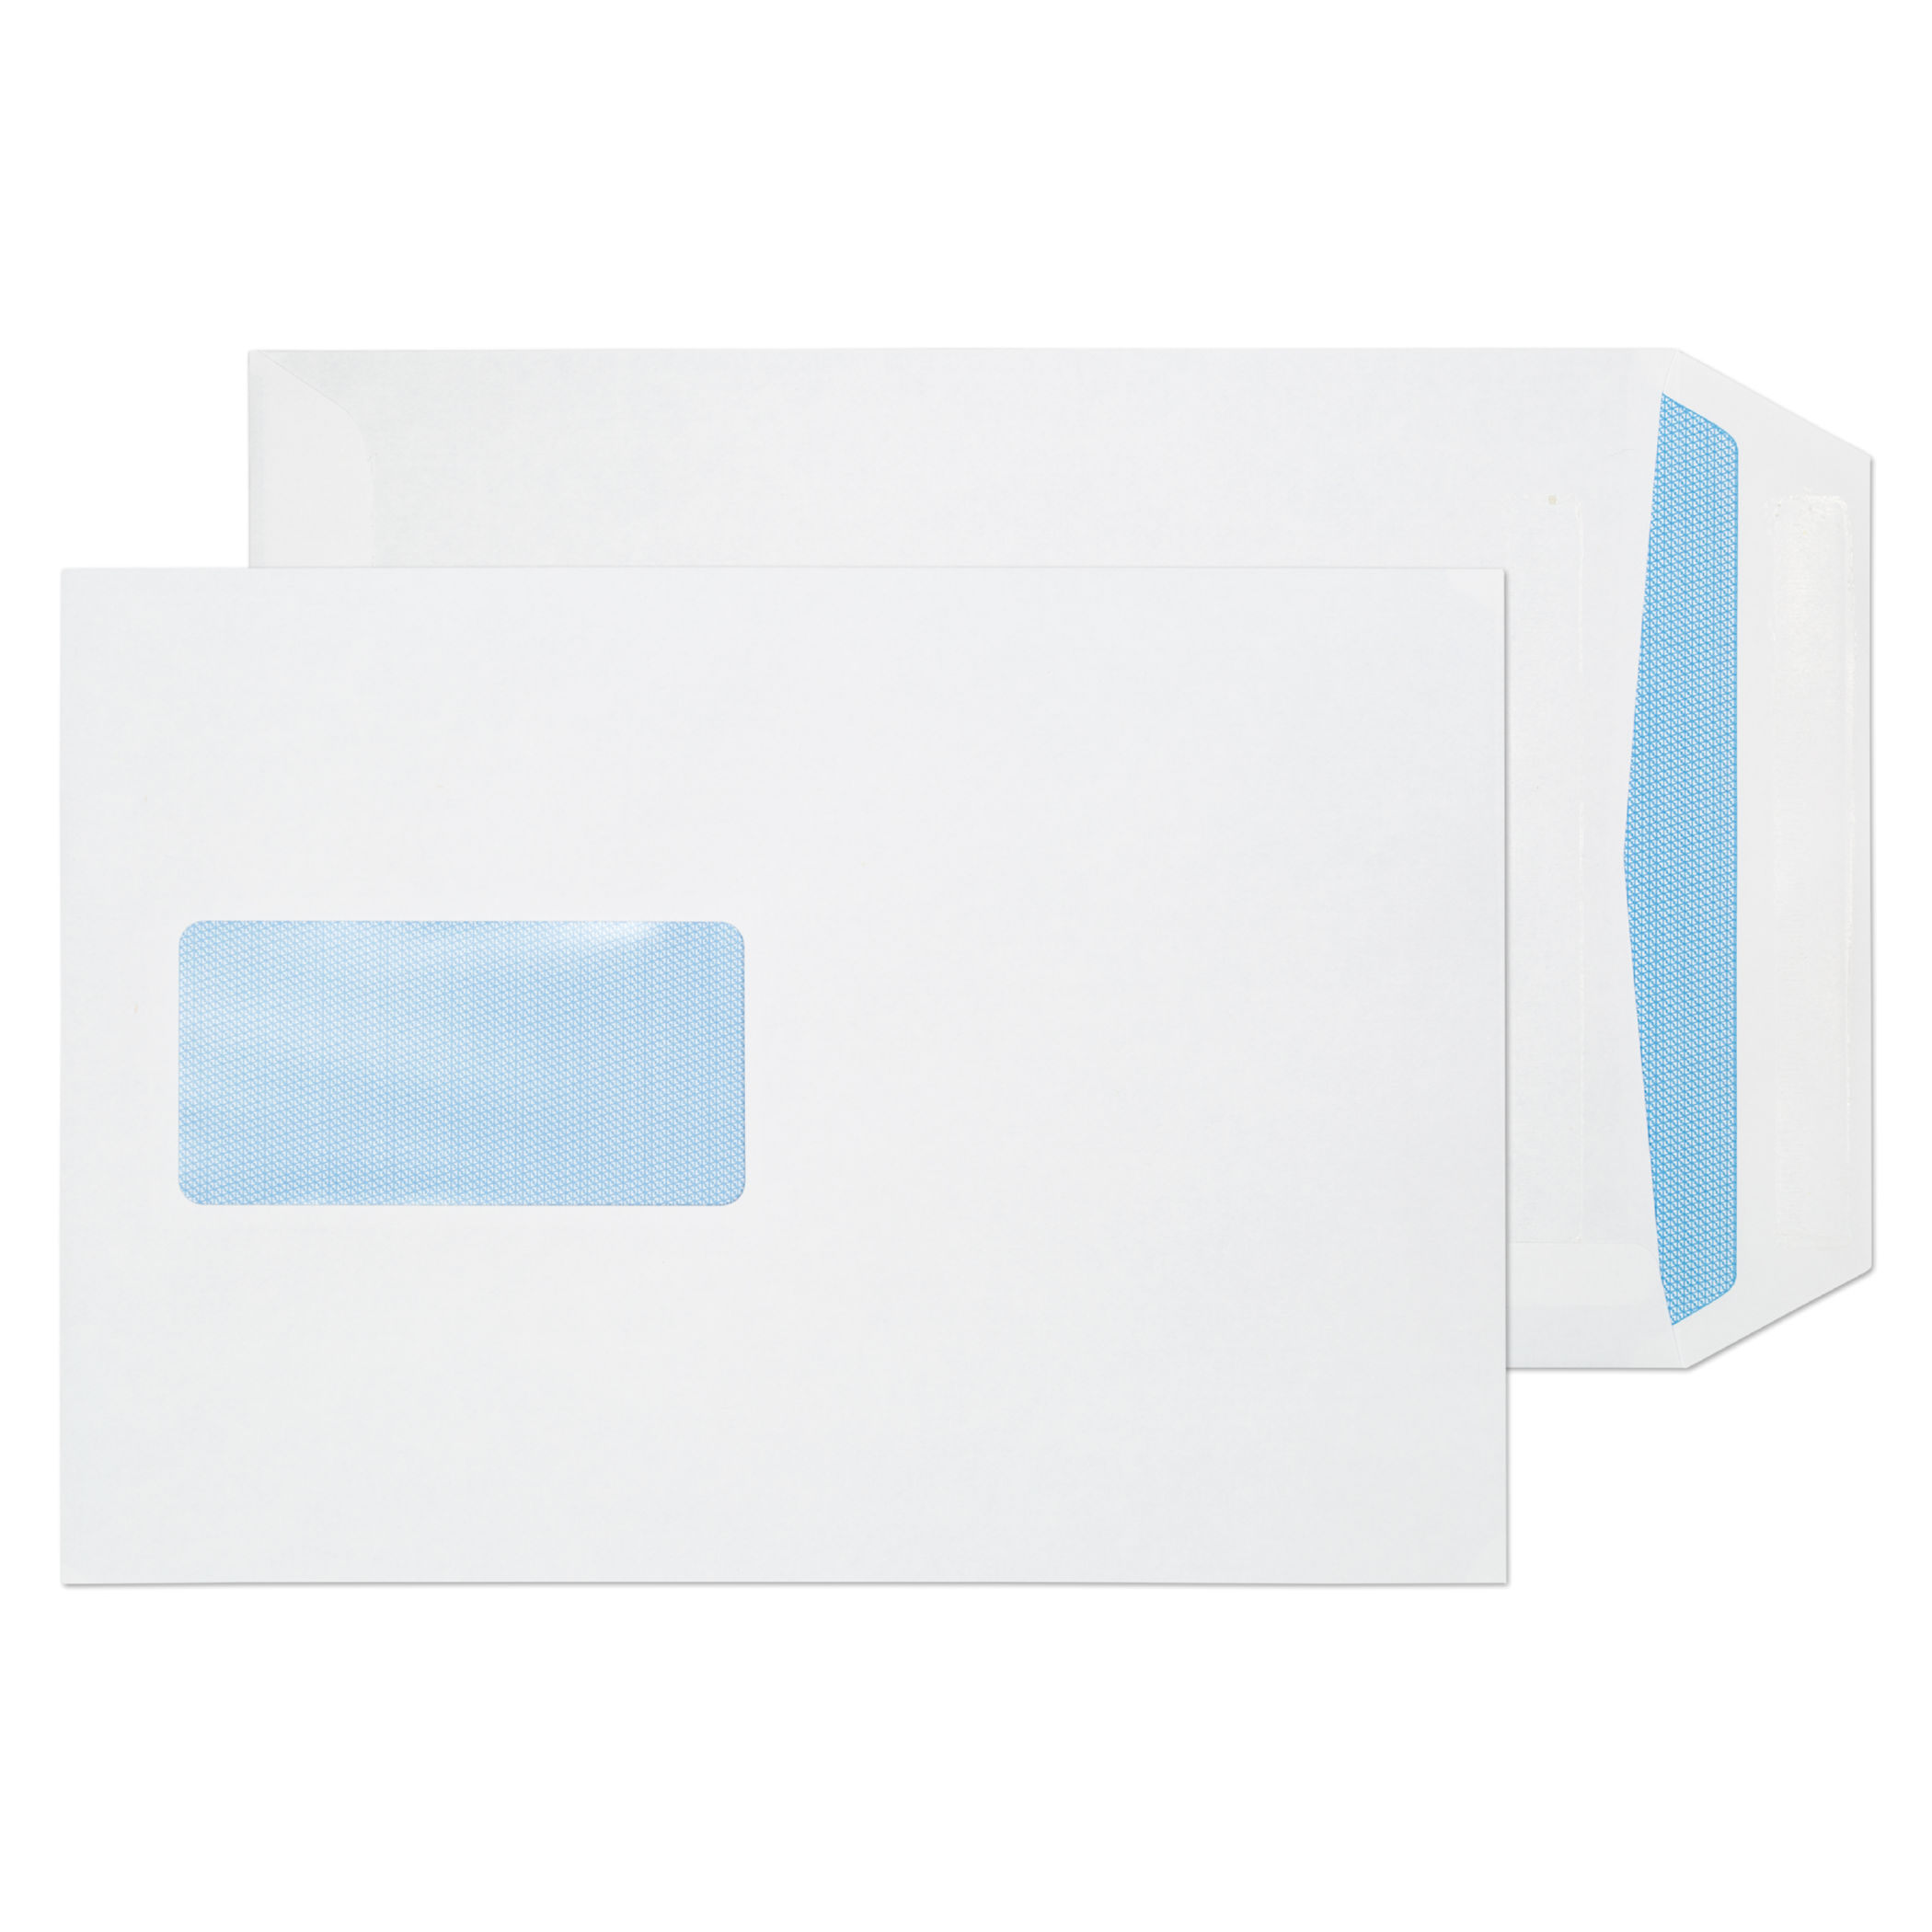 ValueX Pocket Envelope C5 Self Seal Window 90gsm White (Pack 500)